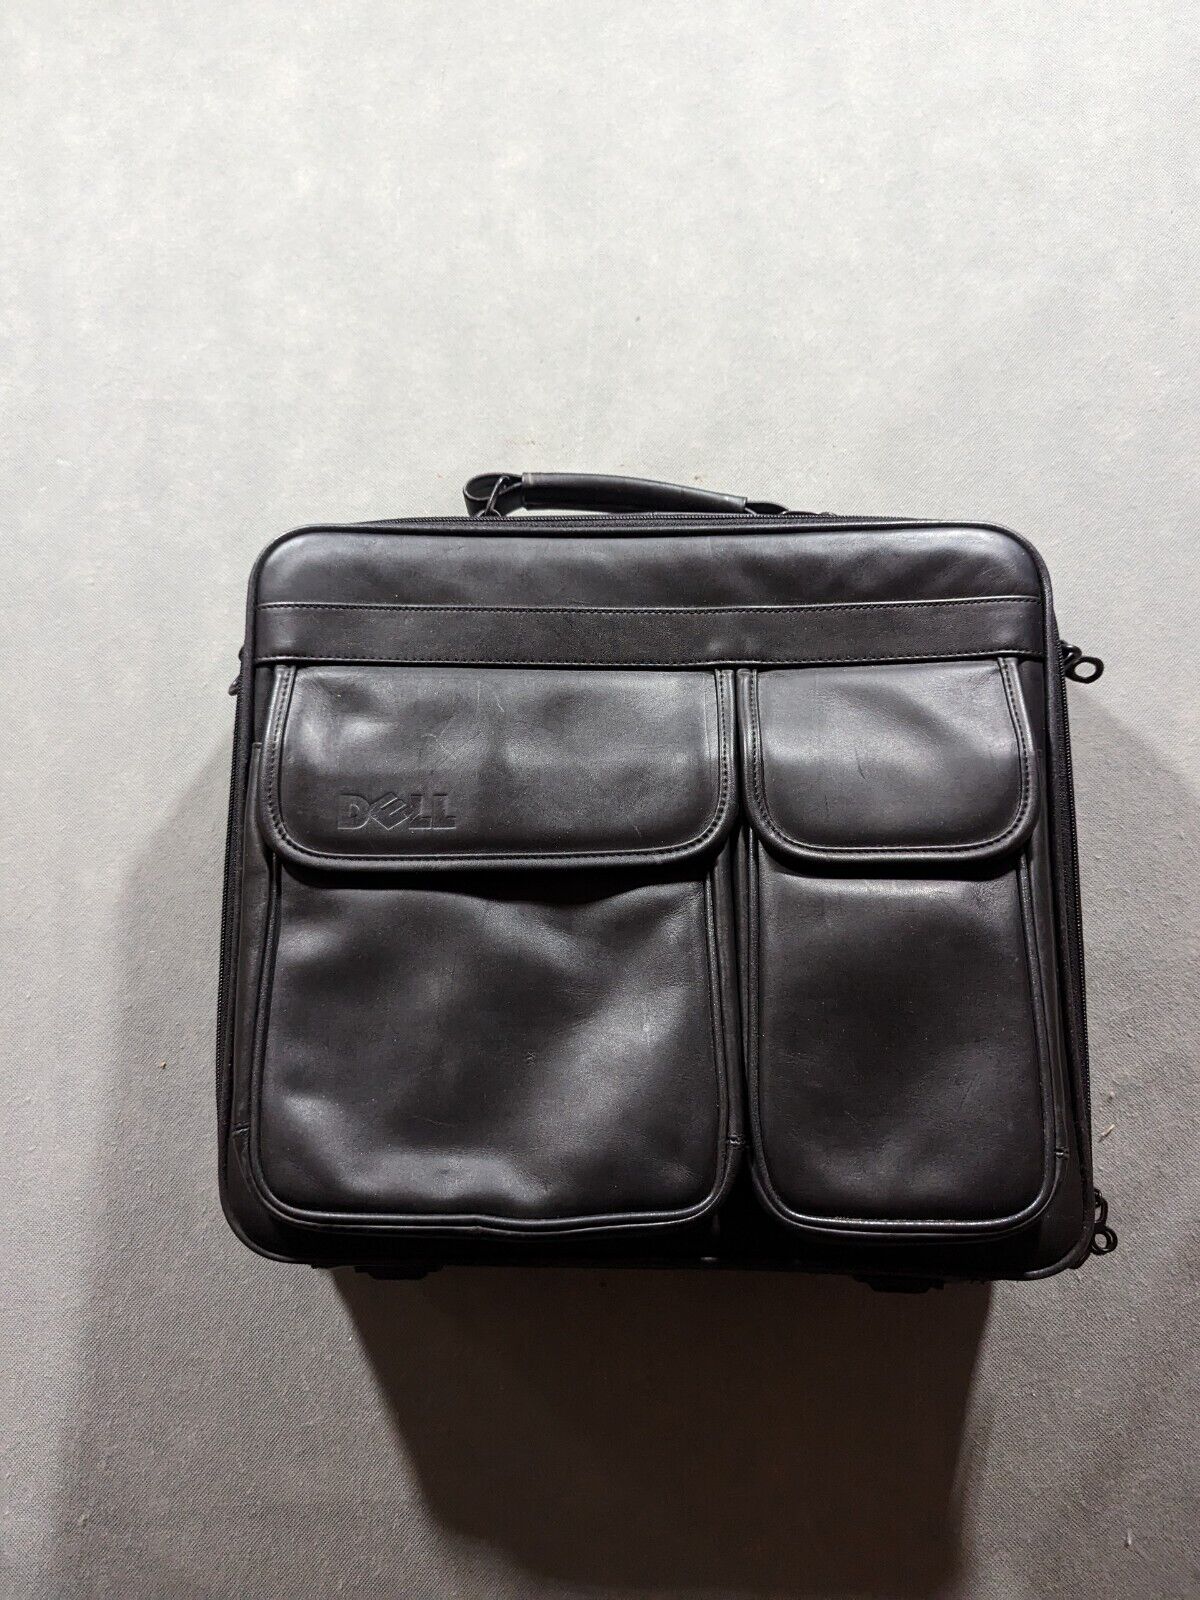 Dell Computer Bag Large Black Leather Laptop Messenger Portfolio Briefcase 